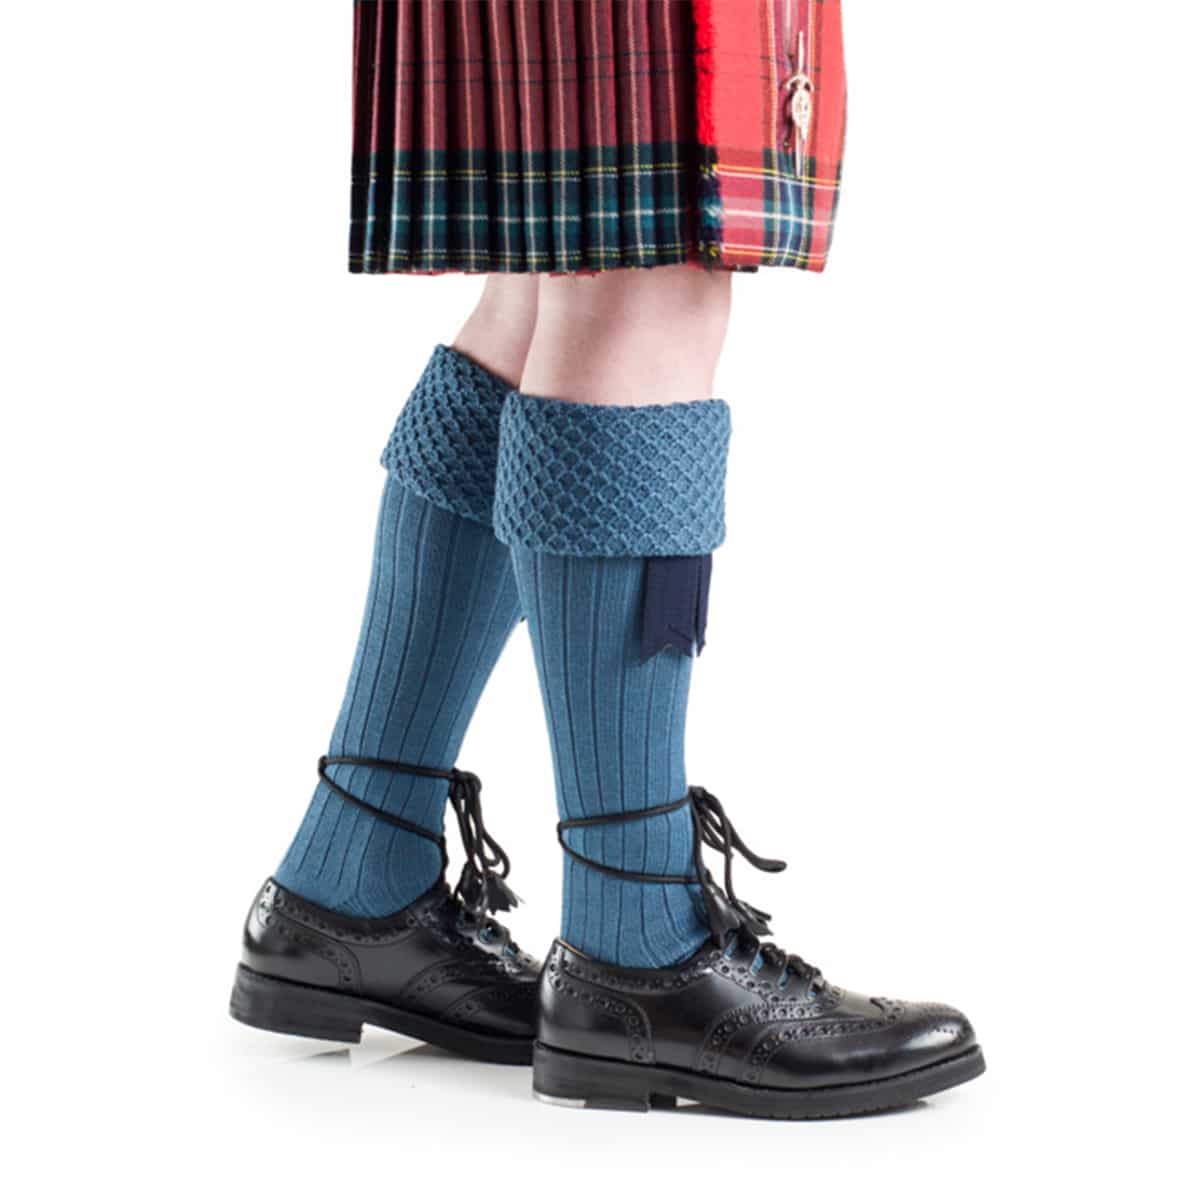 A Piper Kilt Hose wearing Piper Kilt Hose (Special Order).